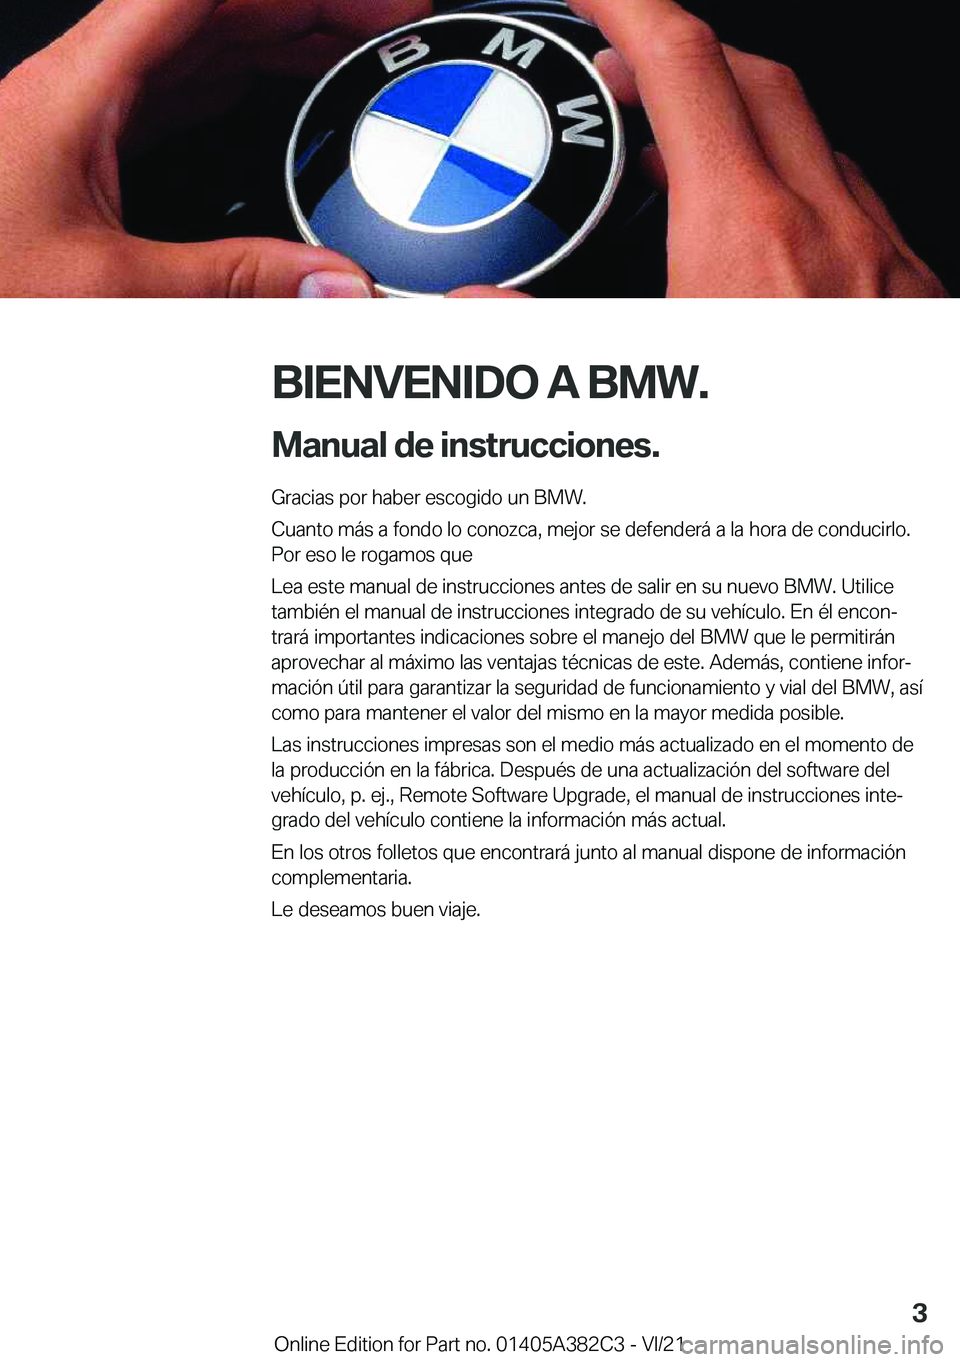 BMW Z4 2022  Manuales de Empleo (in Spanish) �B�I�E�N�V�E�N�I�D�O��A��B�M�W�.
�M�a�n�u�a�l��d�e��i�n�s�t�r�u�c�c�i�o�n�e�s�. �G�r�a�c�i�a�s��p�o�r��h�a�b�e�r��e�s�c�o�g�i�d�o��u�n��B�M�W�.
�C�u�a�n�t�o��m�